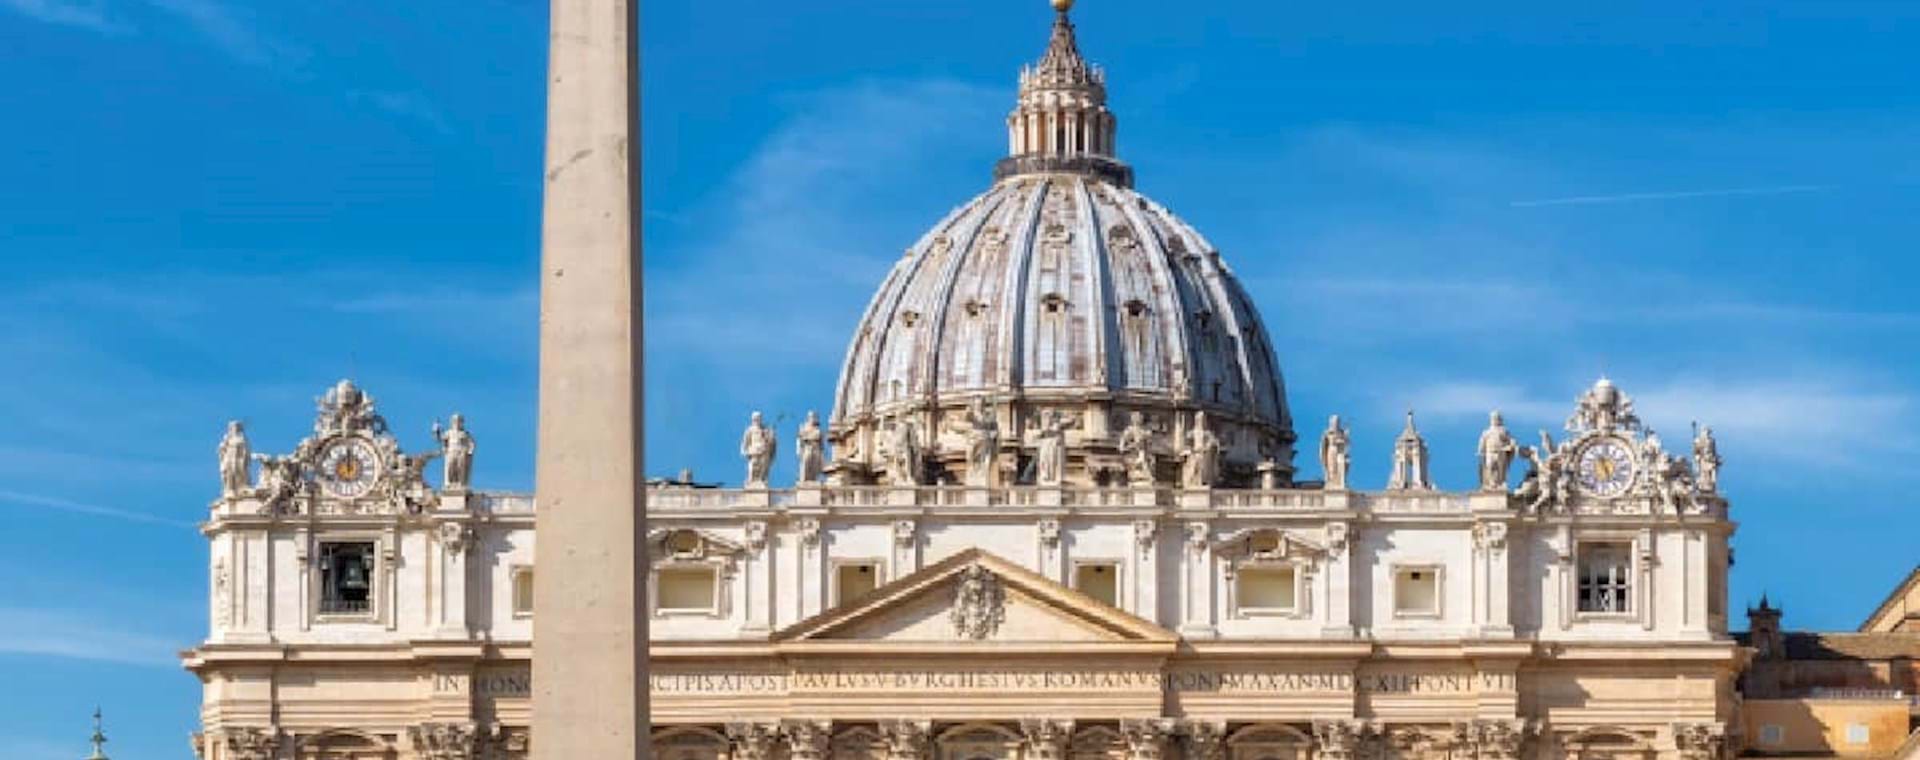 beautiful view of St Peter Basilica